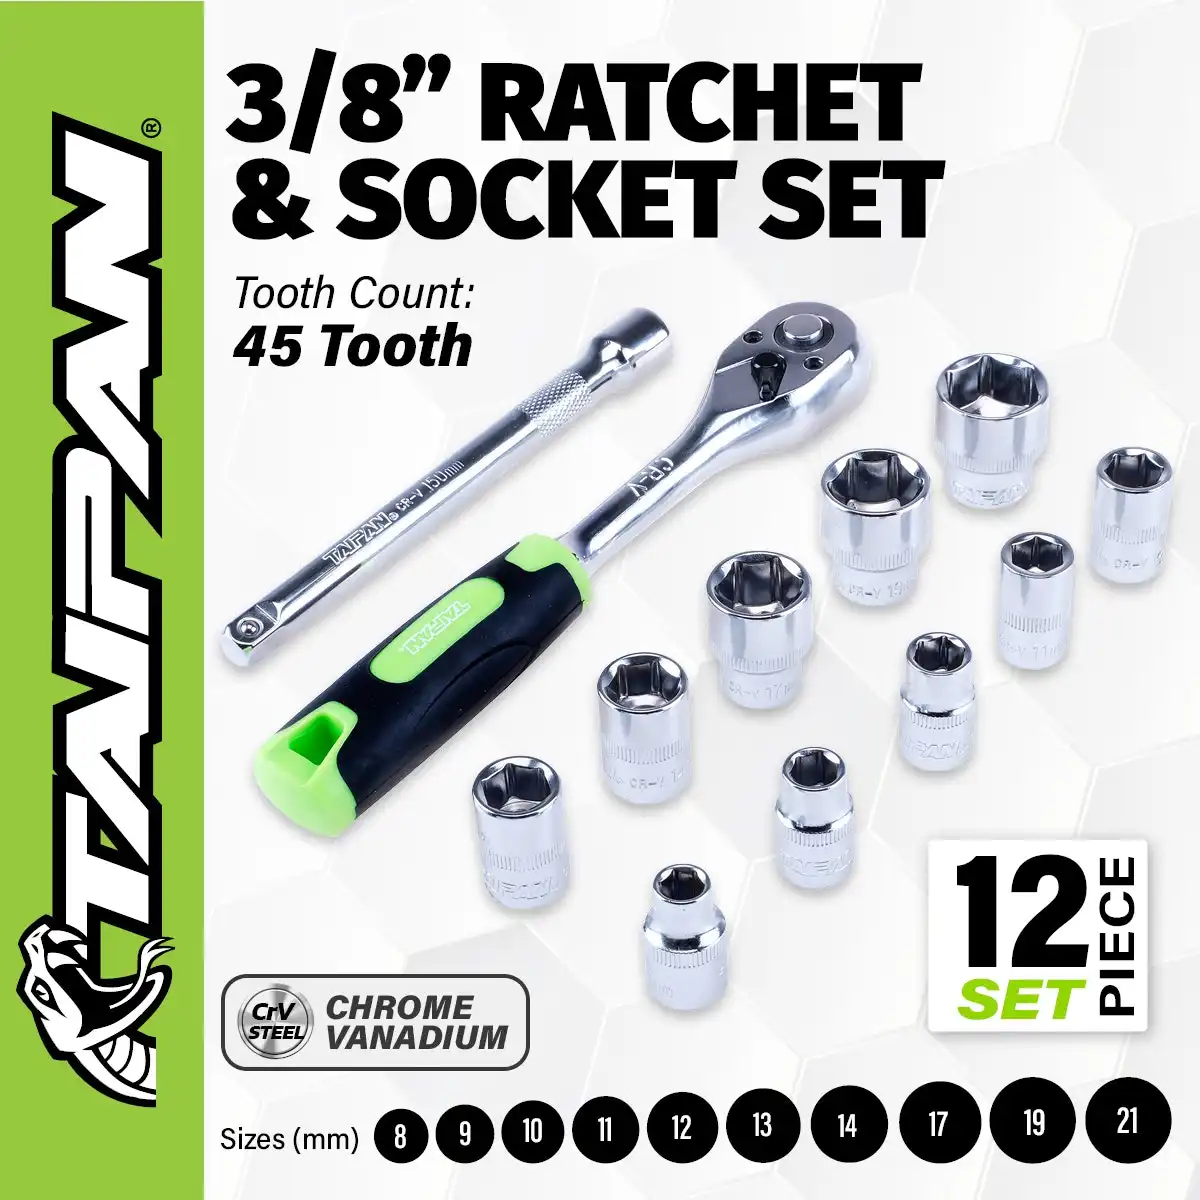 Taipan® 12PCE 3/8" Ratchet Socket Set Premium Quality Chrome Vanadium Steel